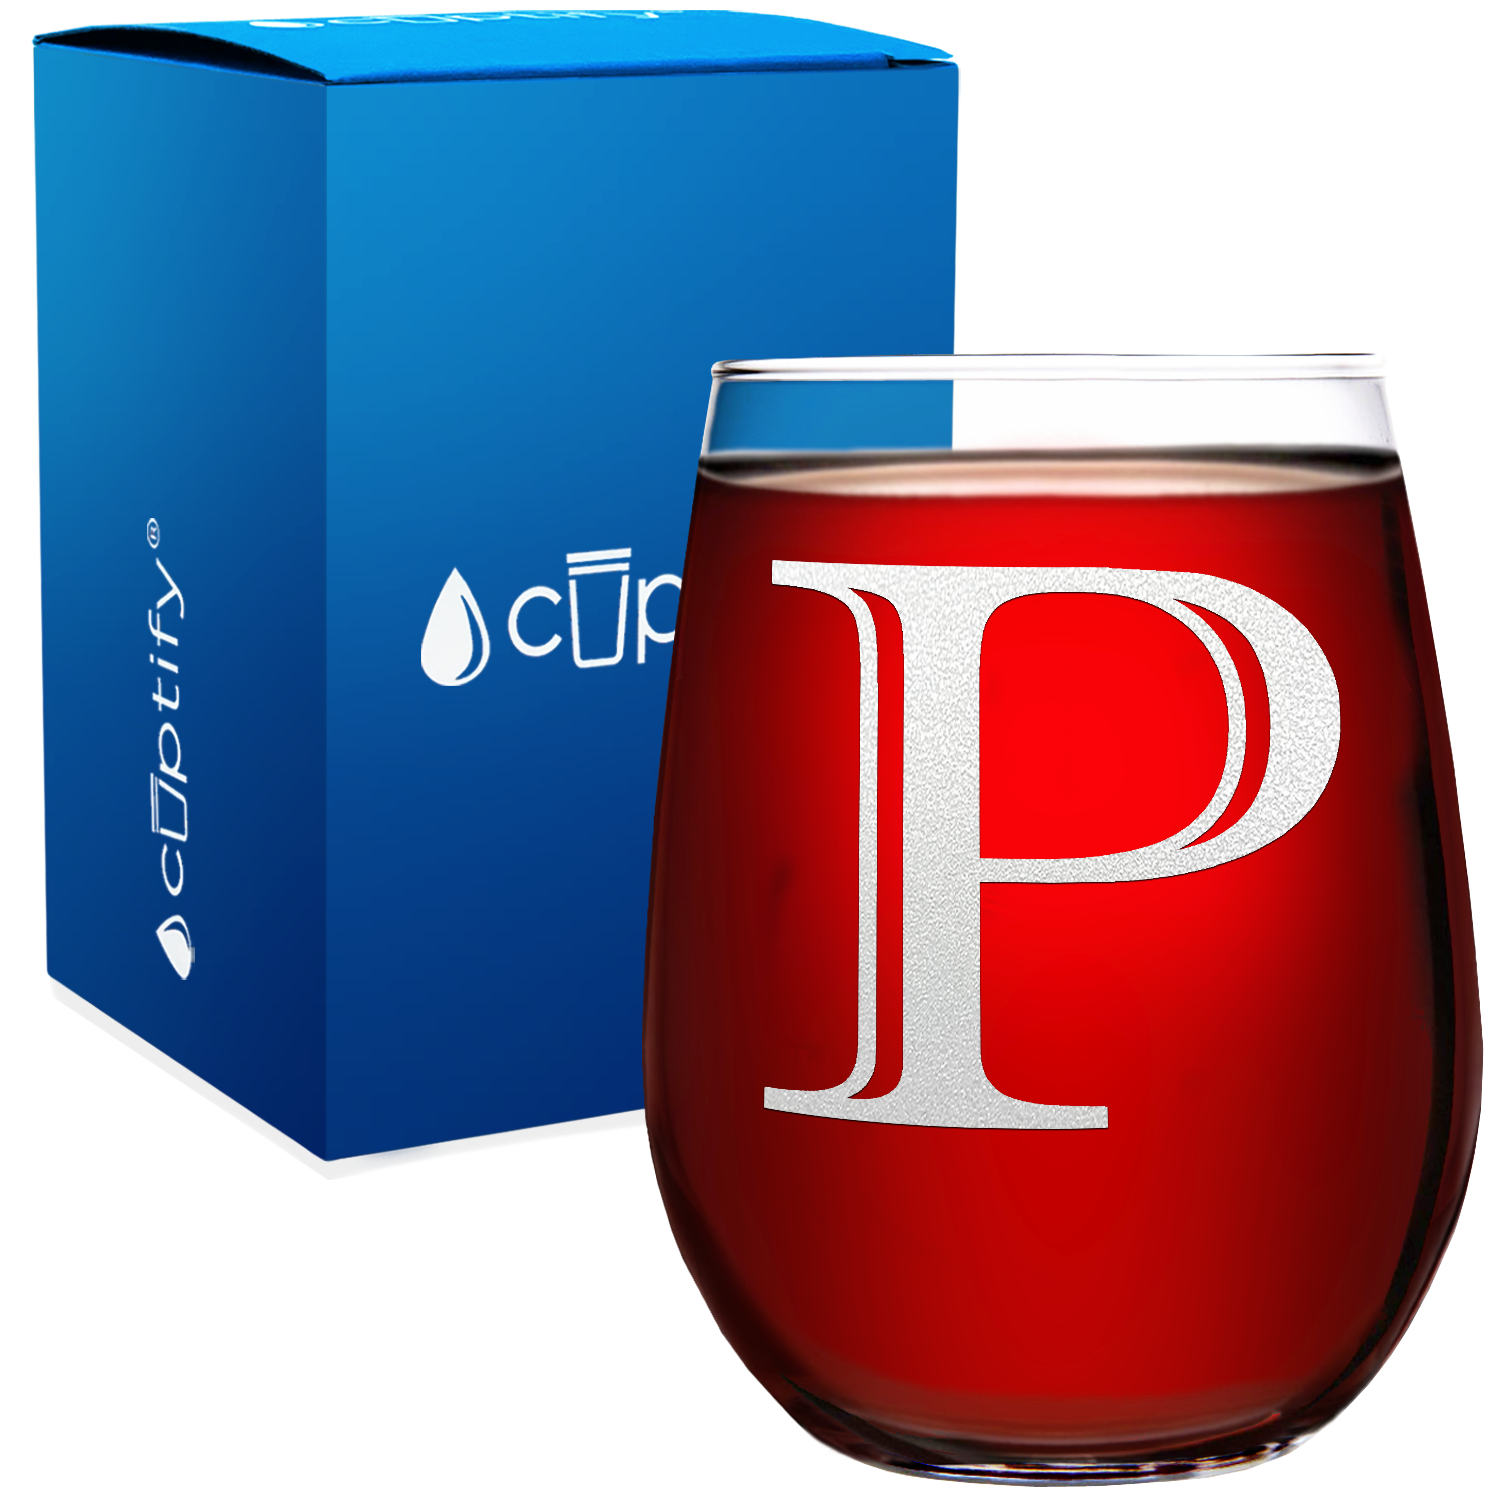 Monogram Initial Letter P 17oz Stemless Wine Glass